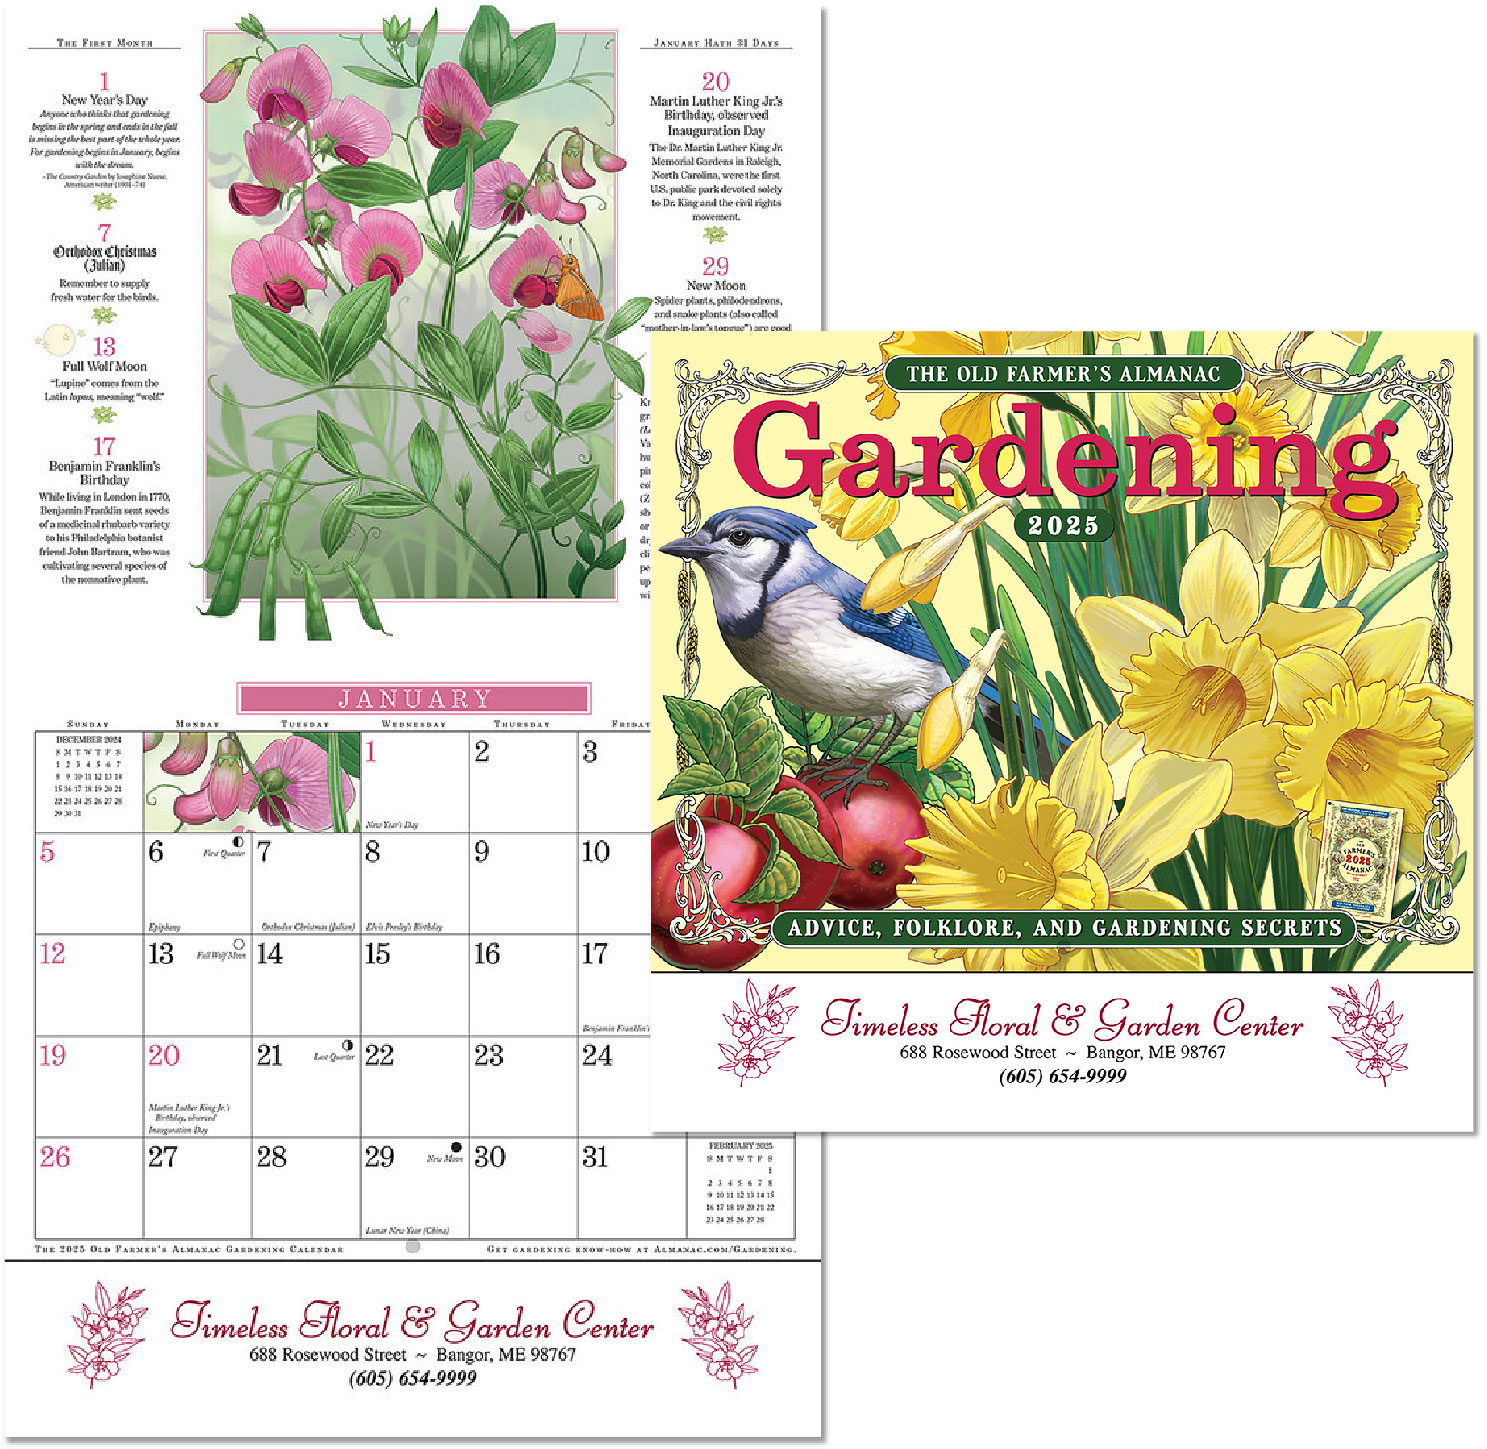 Custom Imprinted Calendar - The Old Farmer's Almanac Gardening #OF56GA1